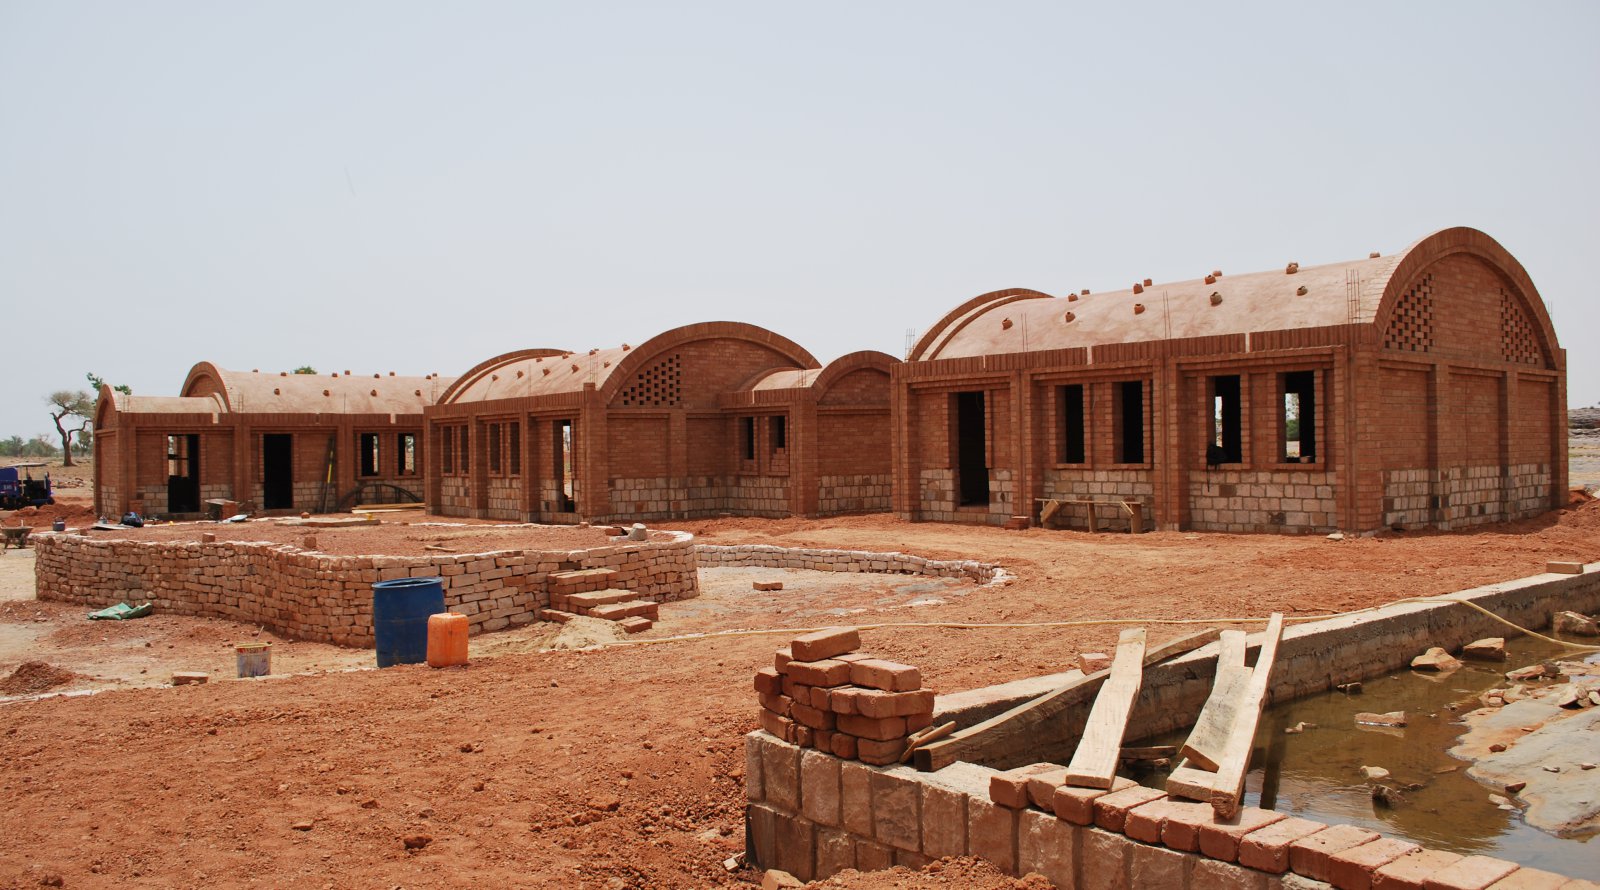 Building made of clay bricks